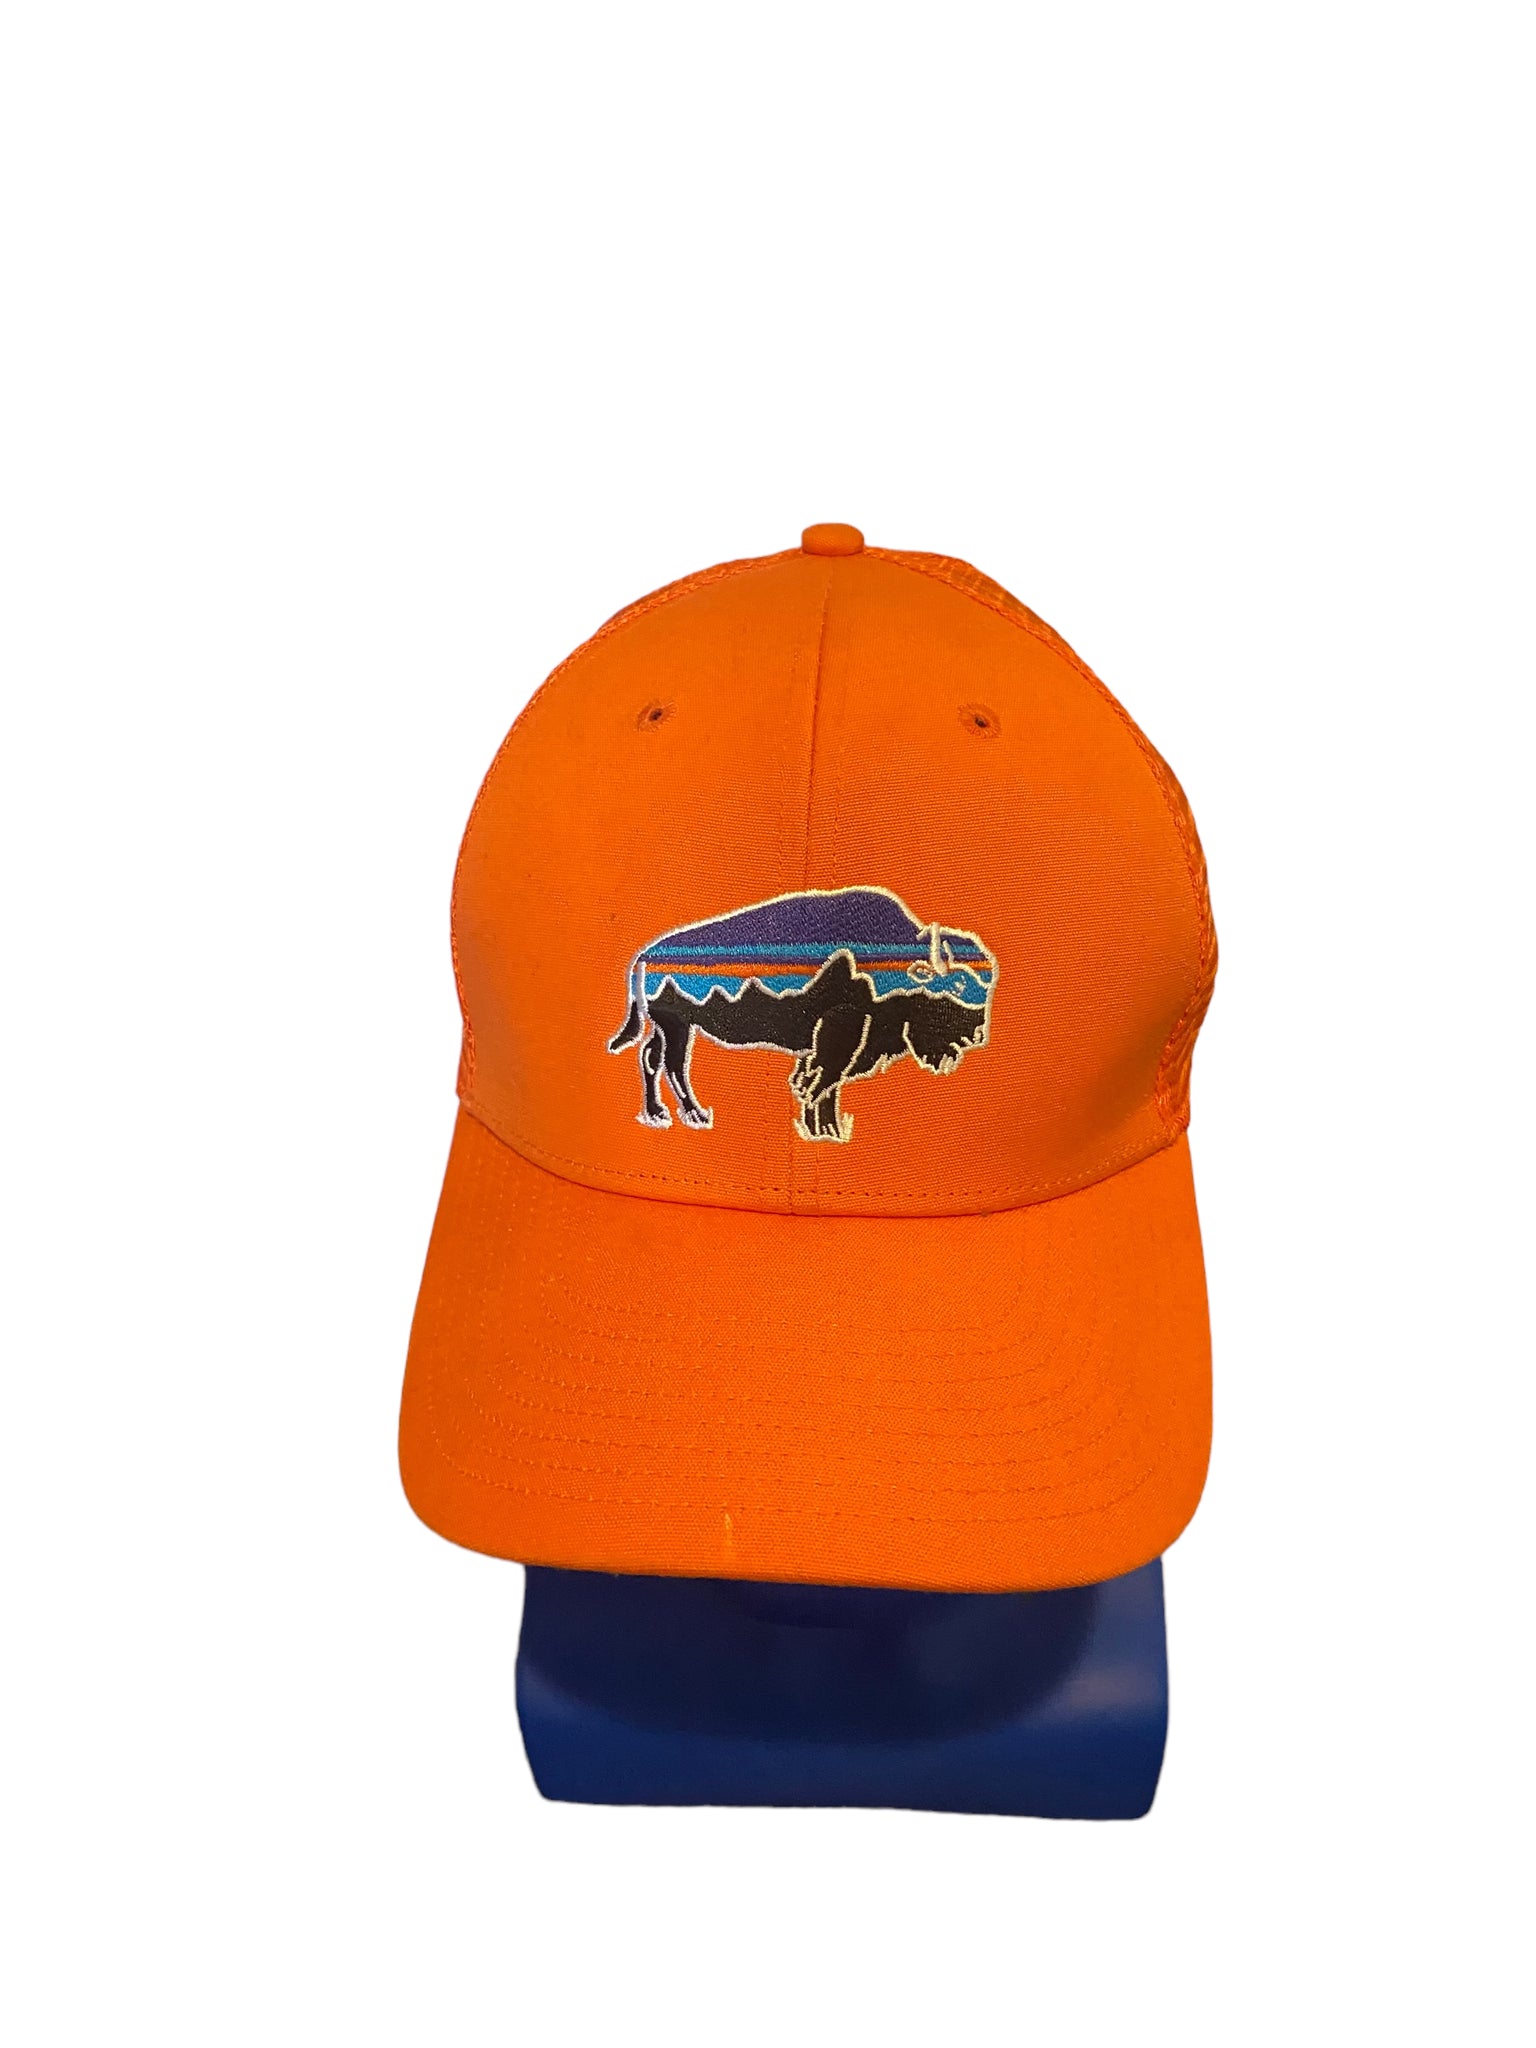 Patagonia Blaze Orange Fitz Roy Bison Buffalo Trucker Hat Mesh Snapback RARE